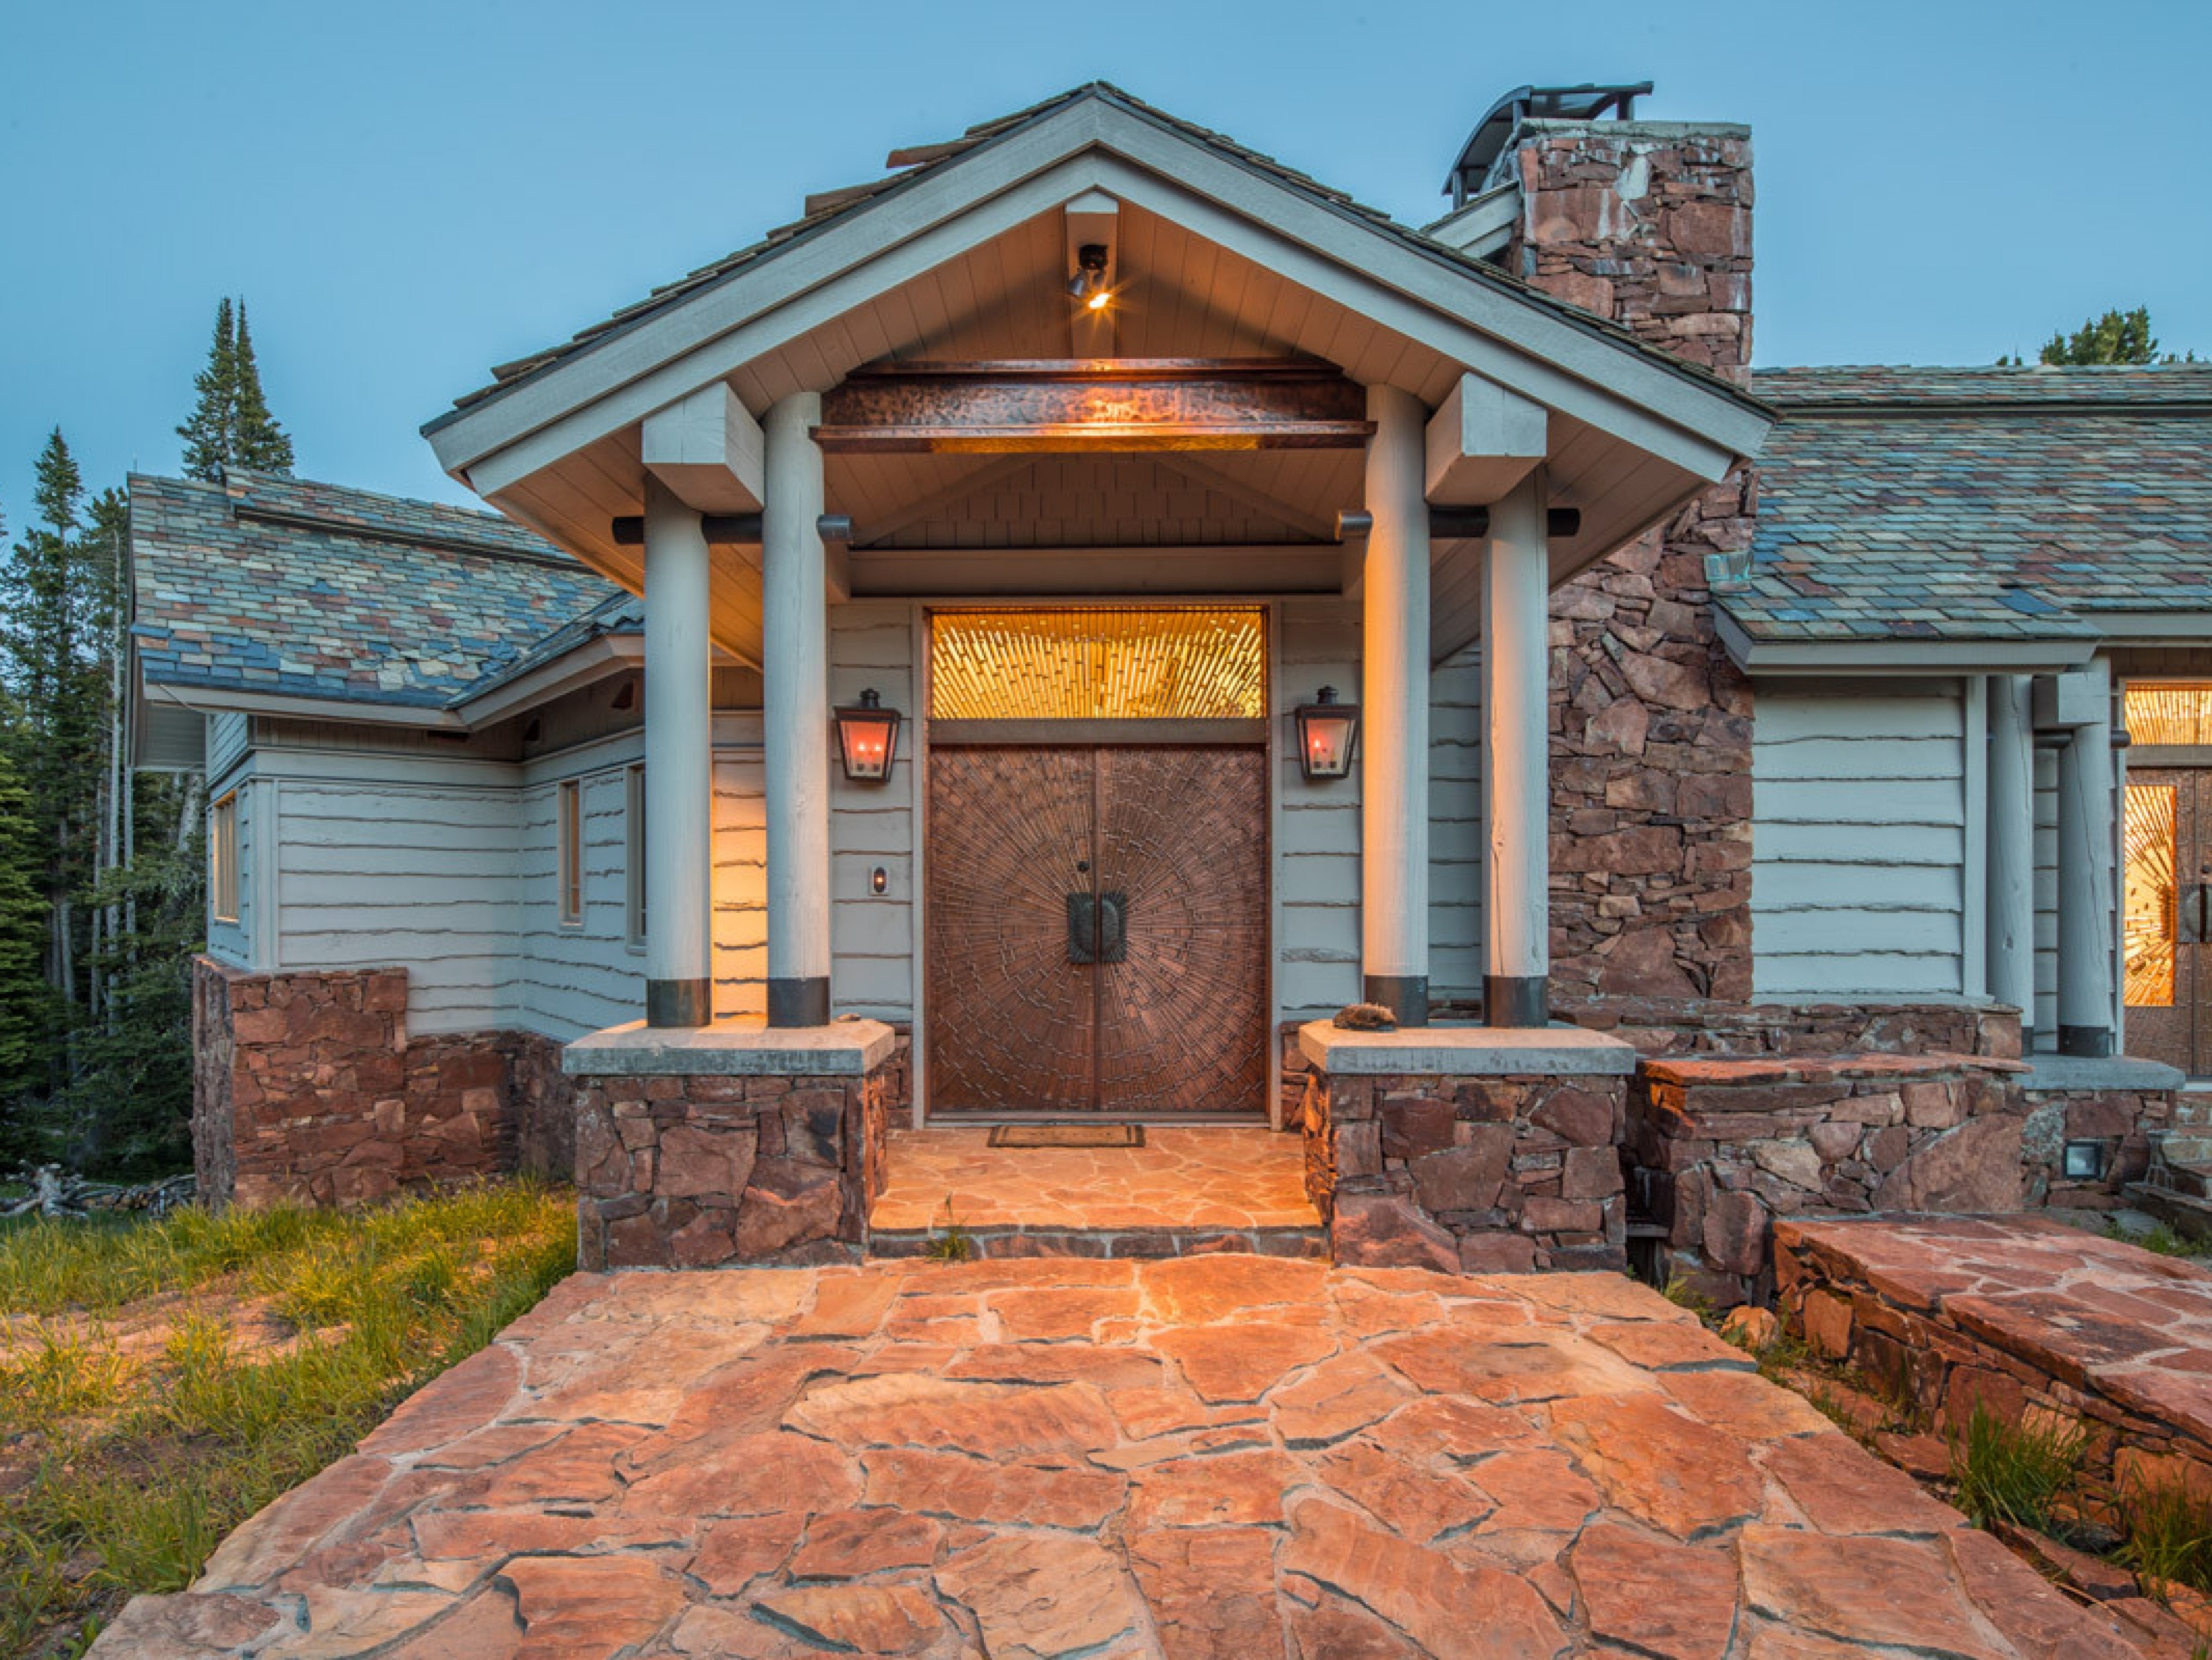 Big Sky 7 cabin - Vacation rentals near Yellowstone